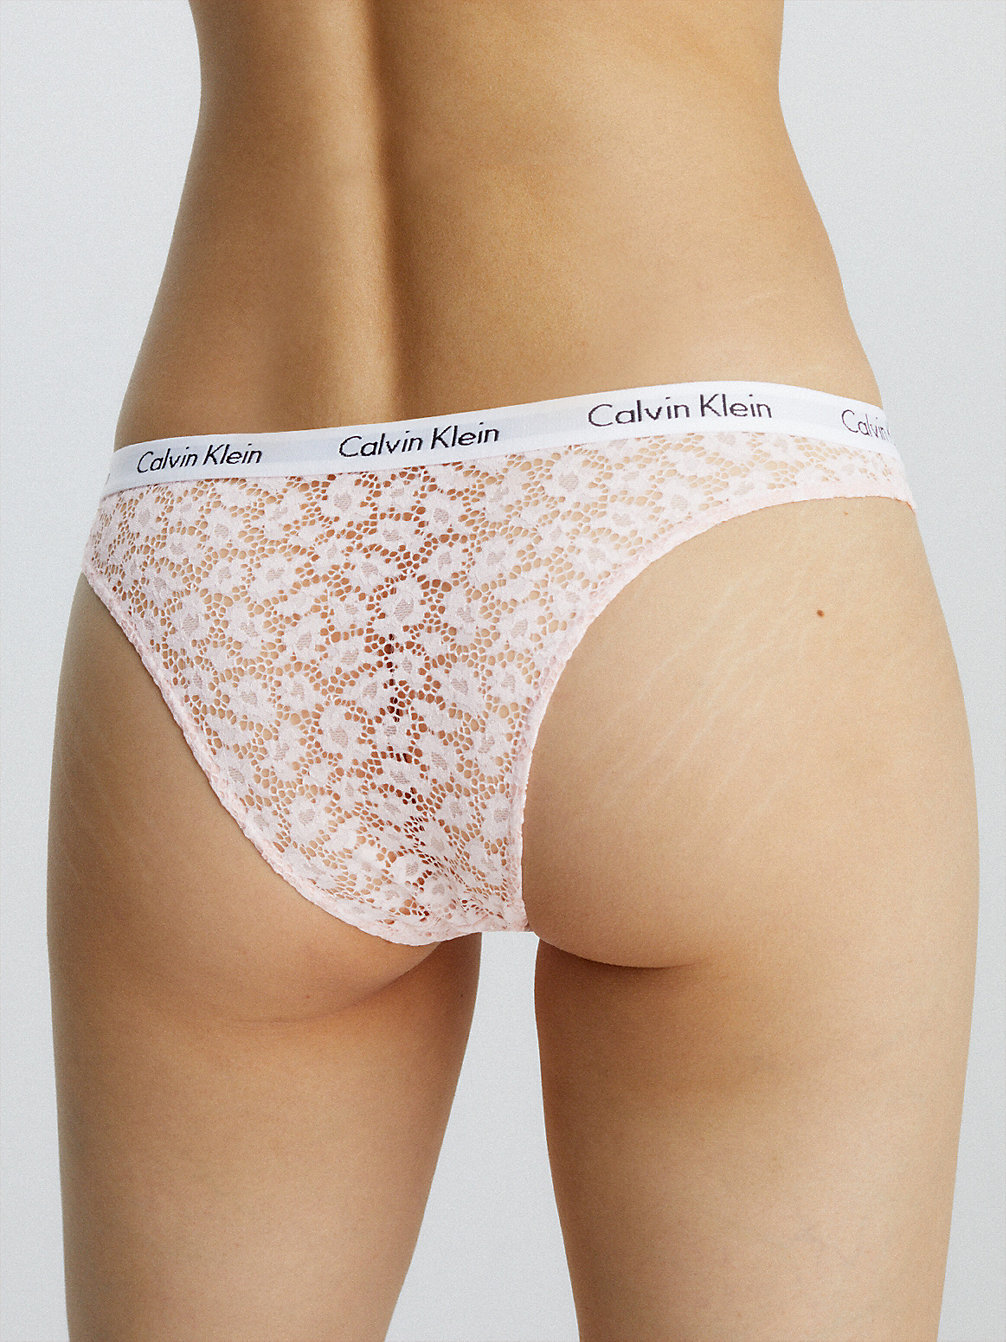 NYMPHS THIGH Brazilian Briefs - Carousel undefined women Calvin Klein